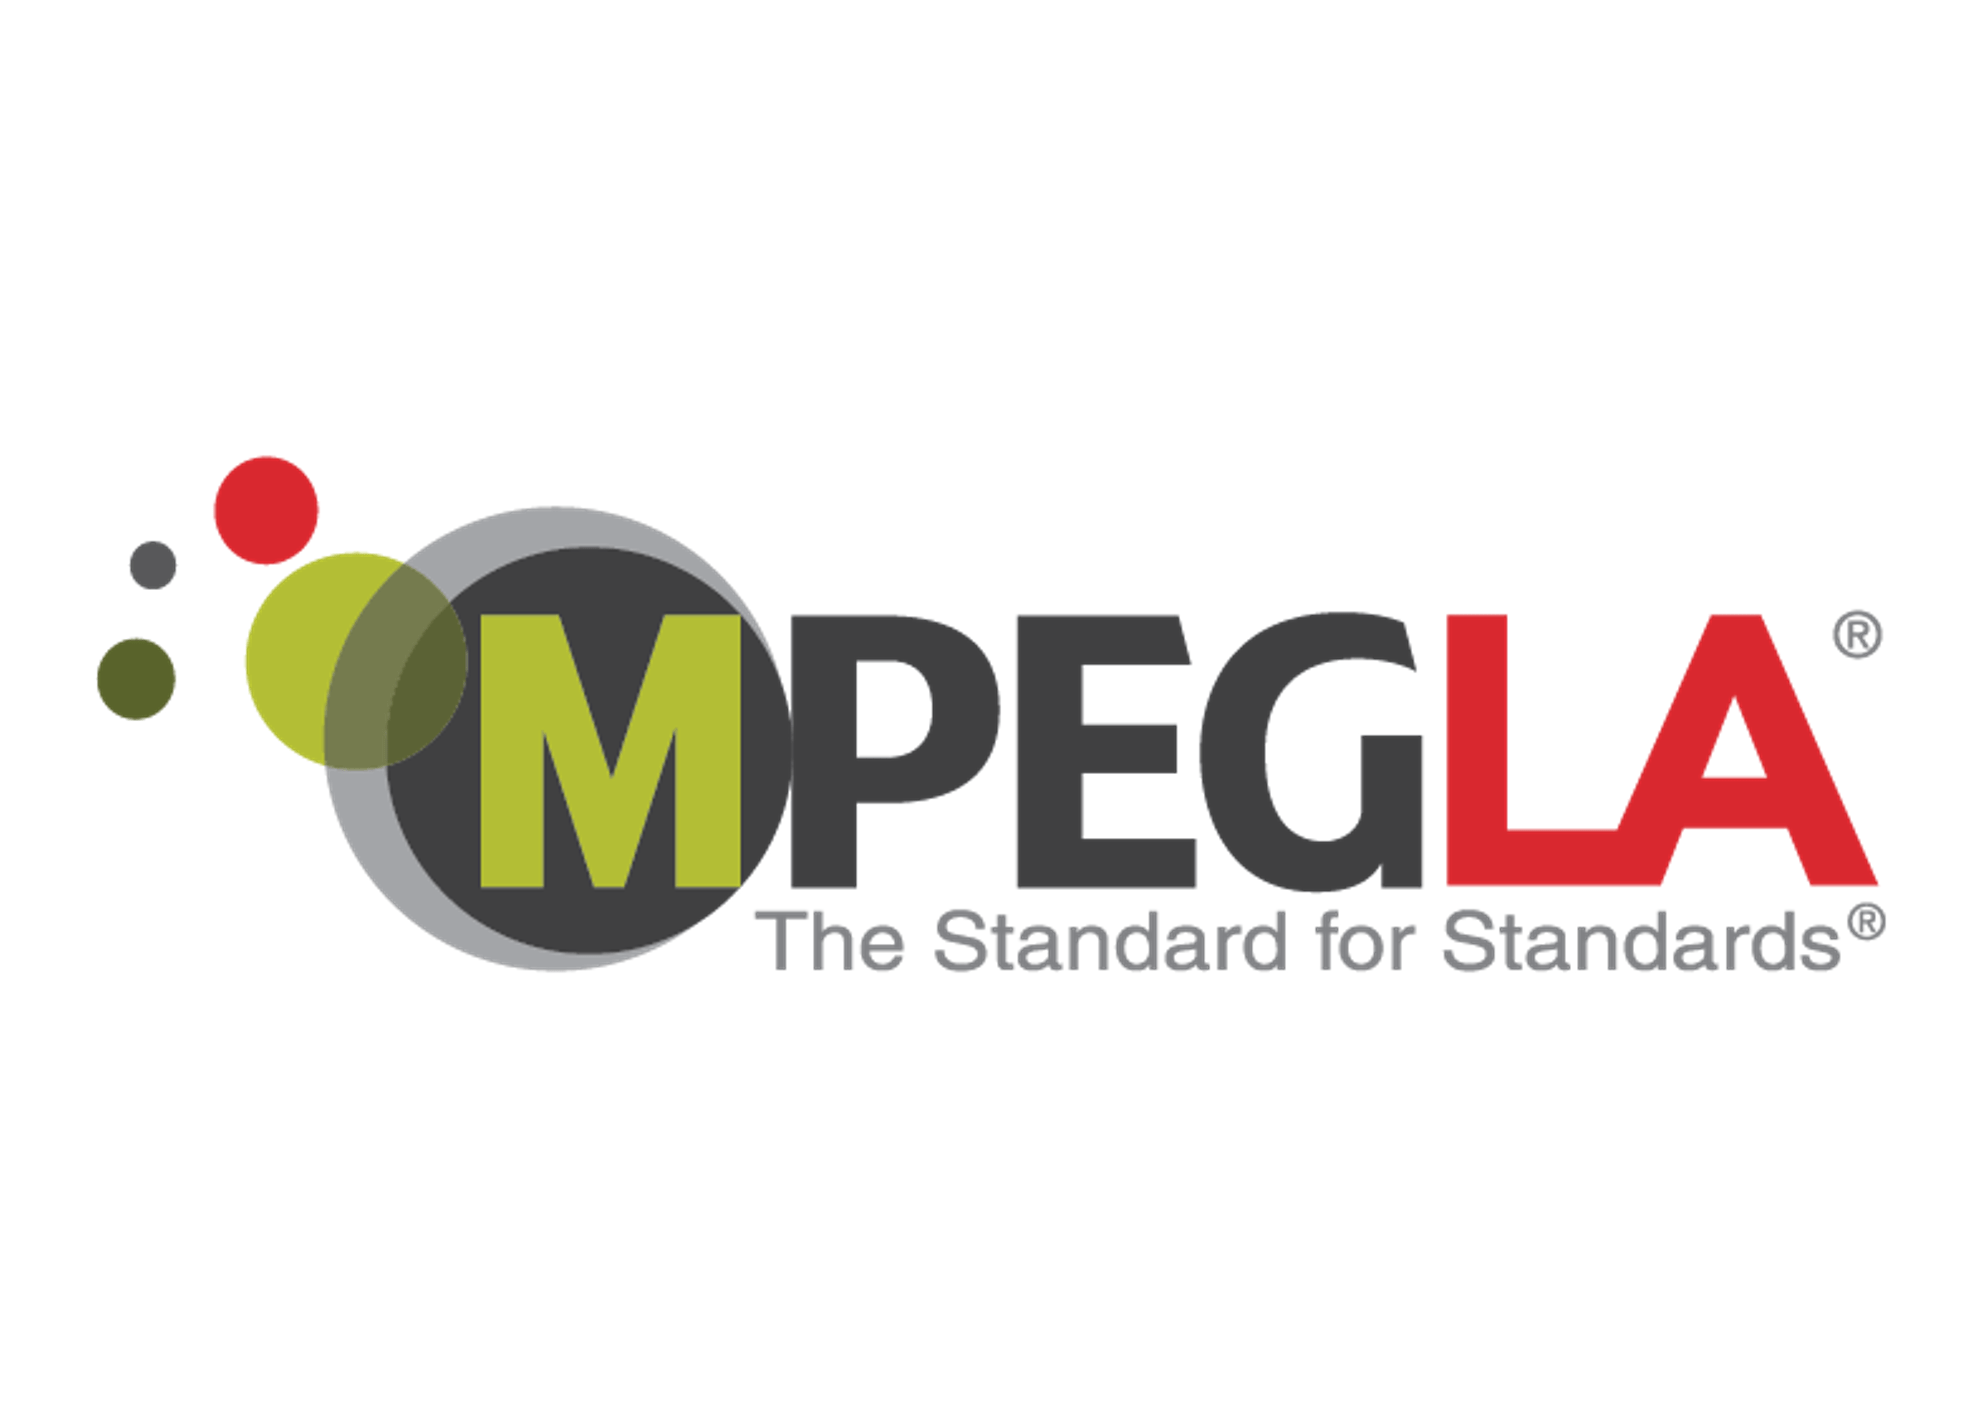 MPEG LA’s EV Charging License Facilitates Worldwide Transition to Electrified Transportation